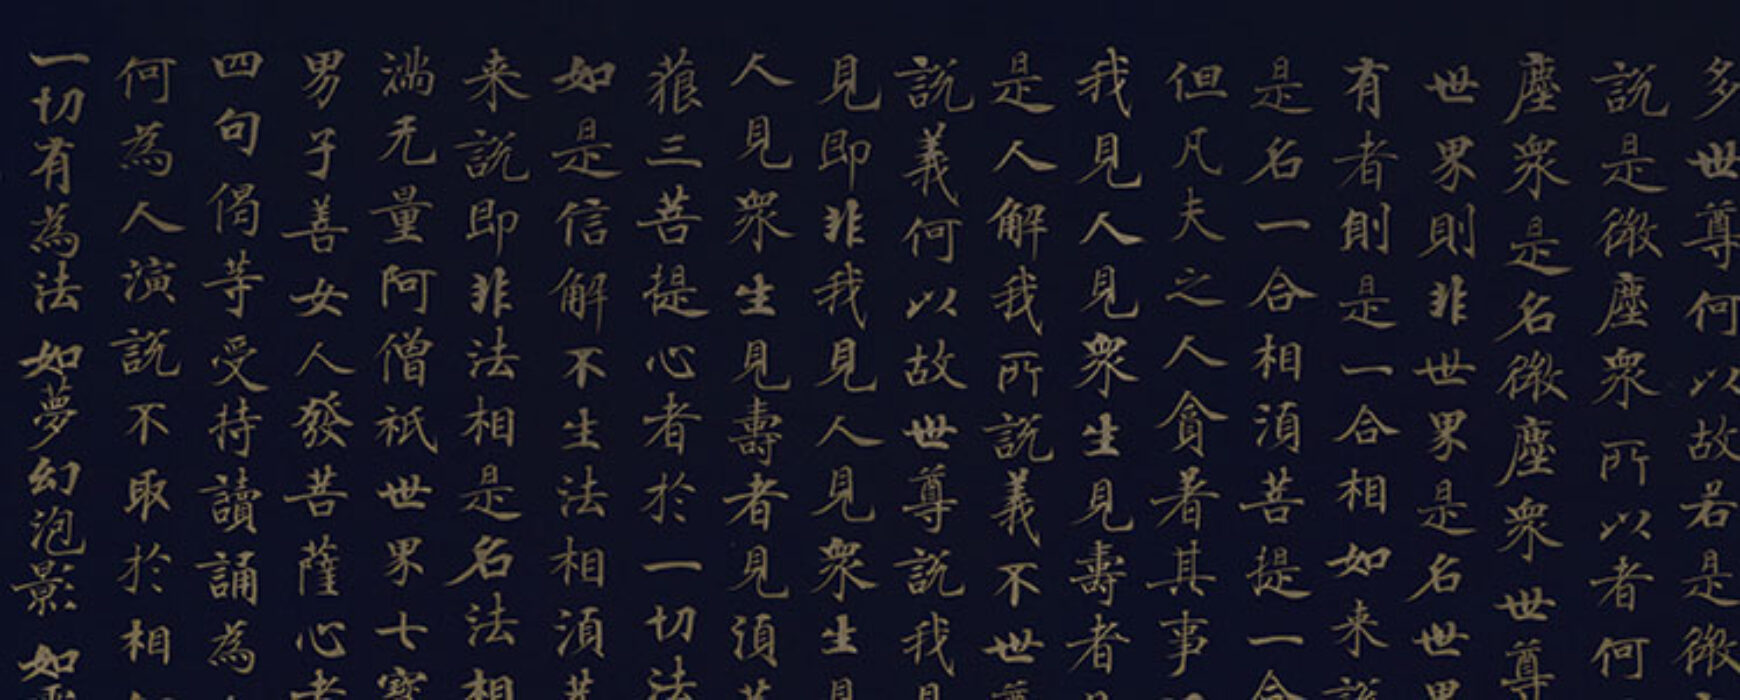 Eighth Volume Of Hualin Translation Series On Buddhist Studies (Chinese)